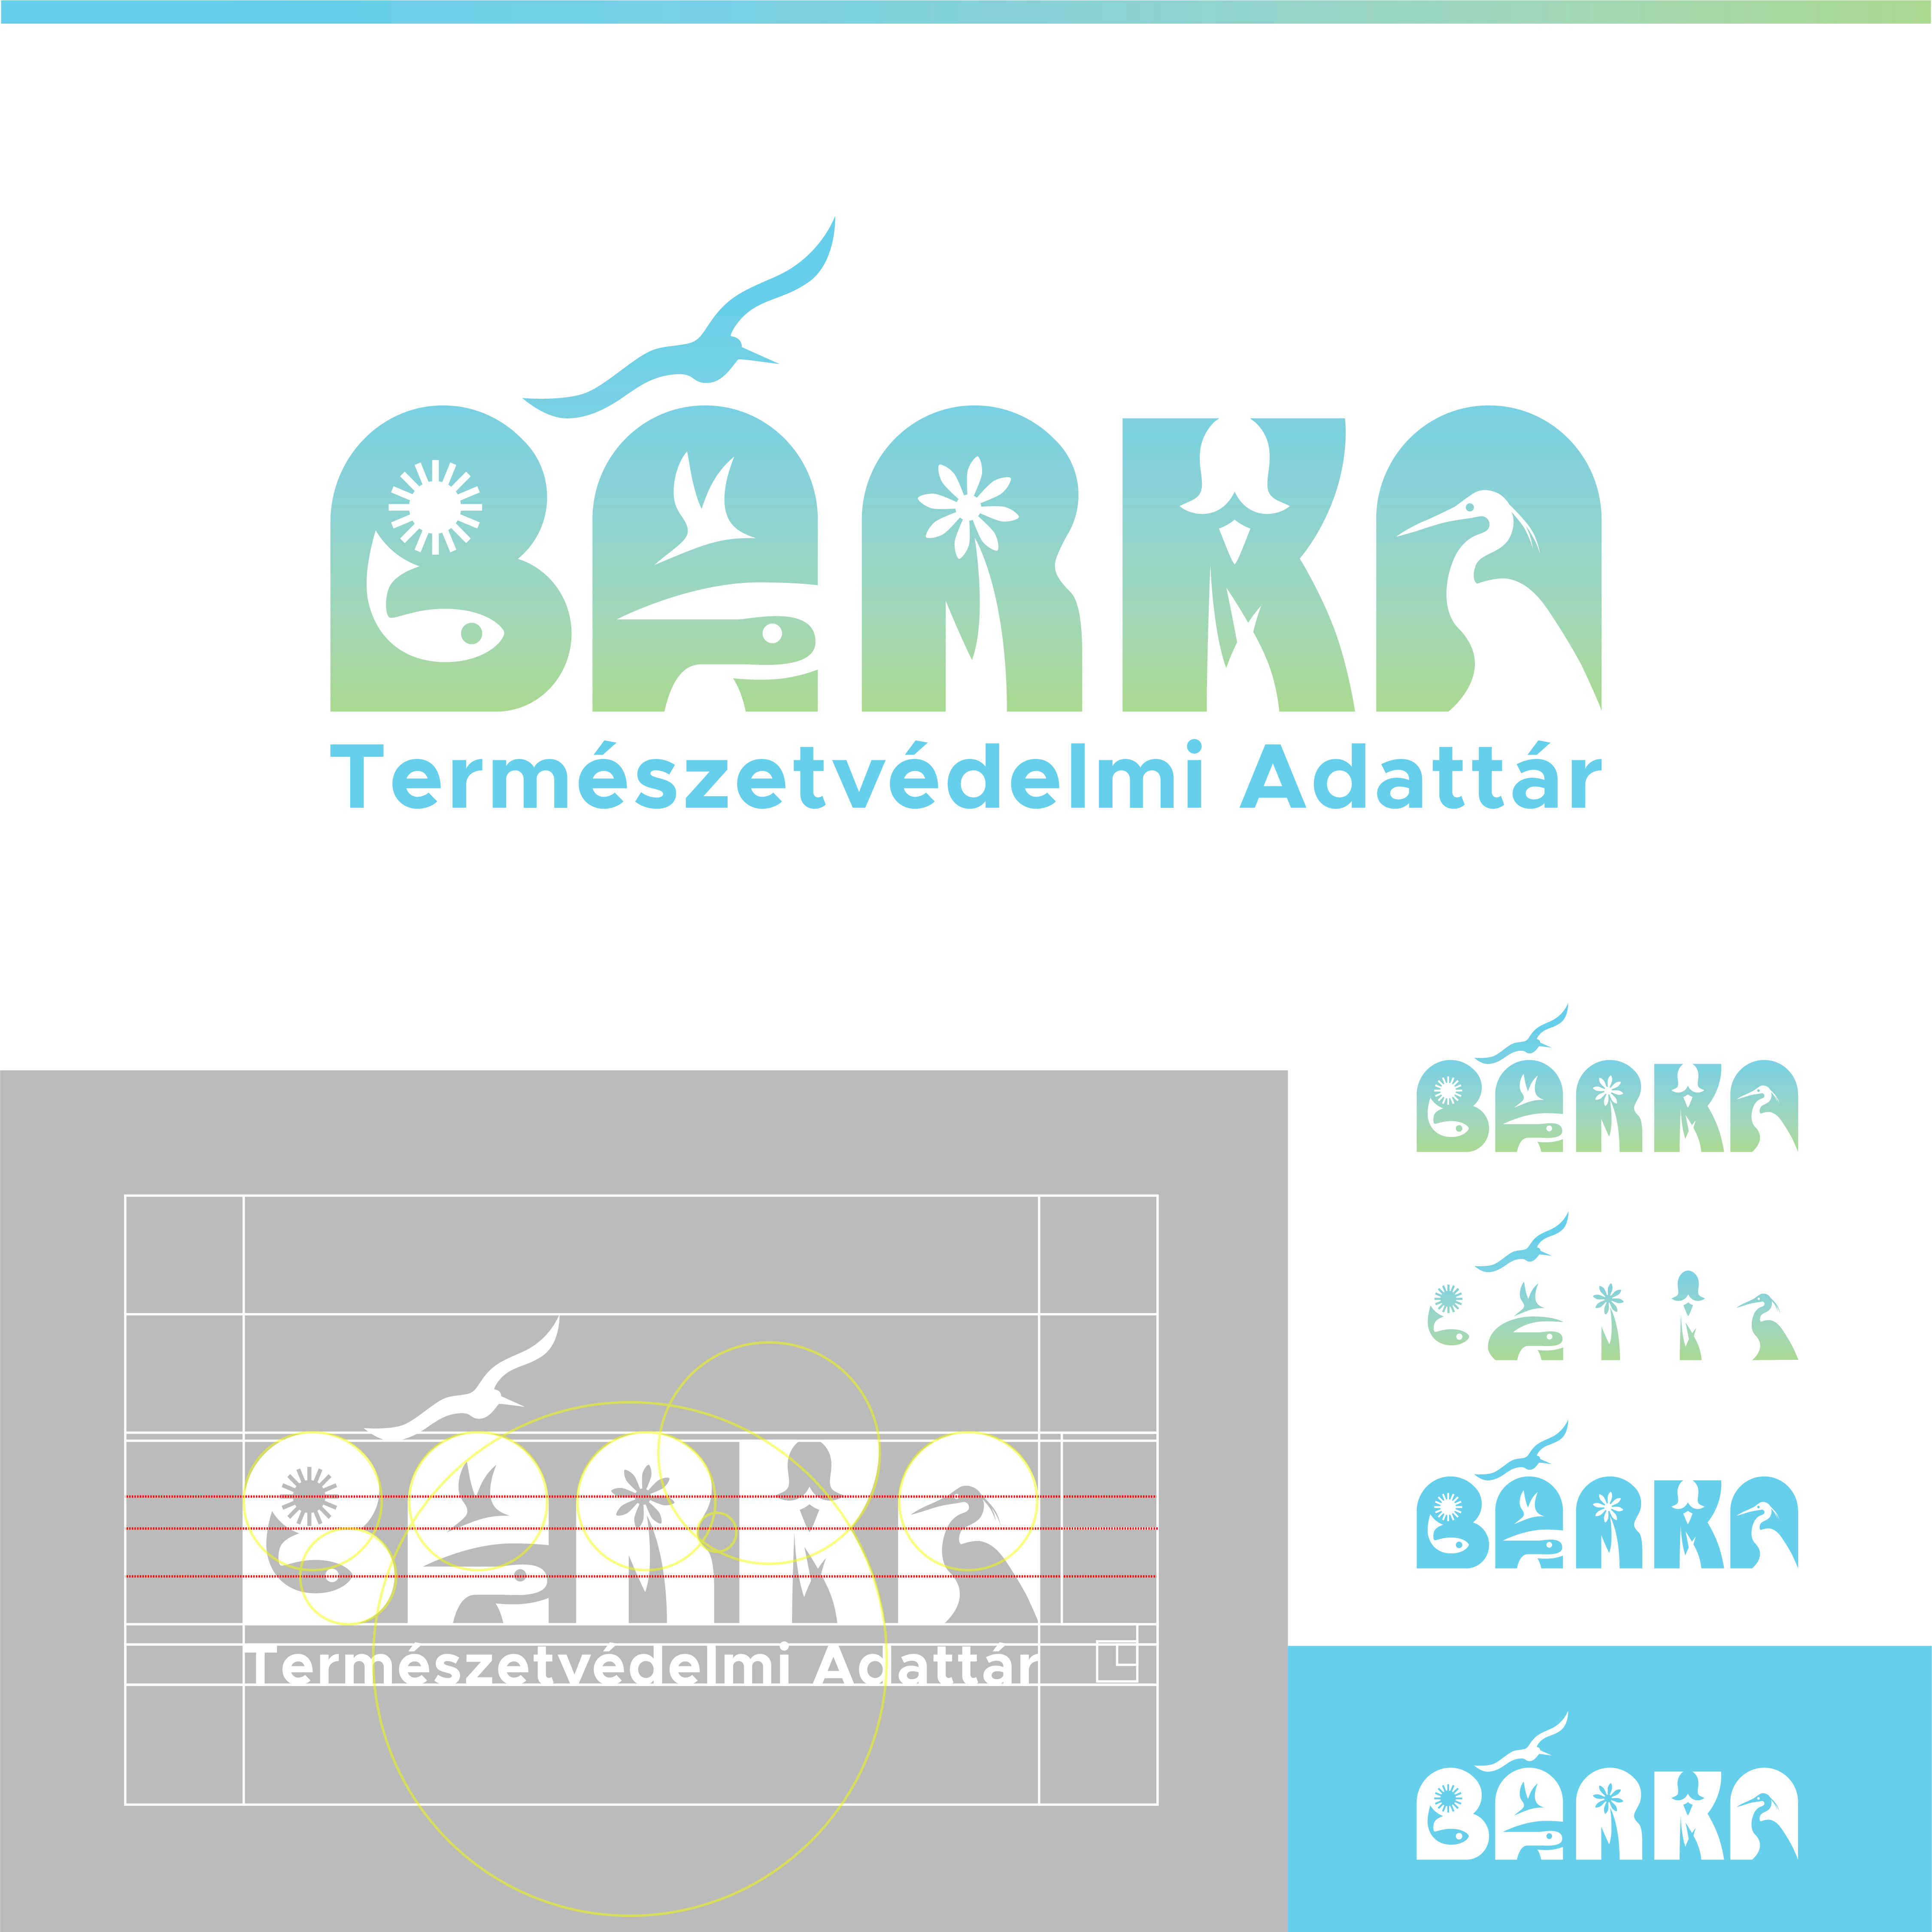 BÁRKA logo design, identity design and creation of an image manual